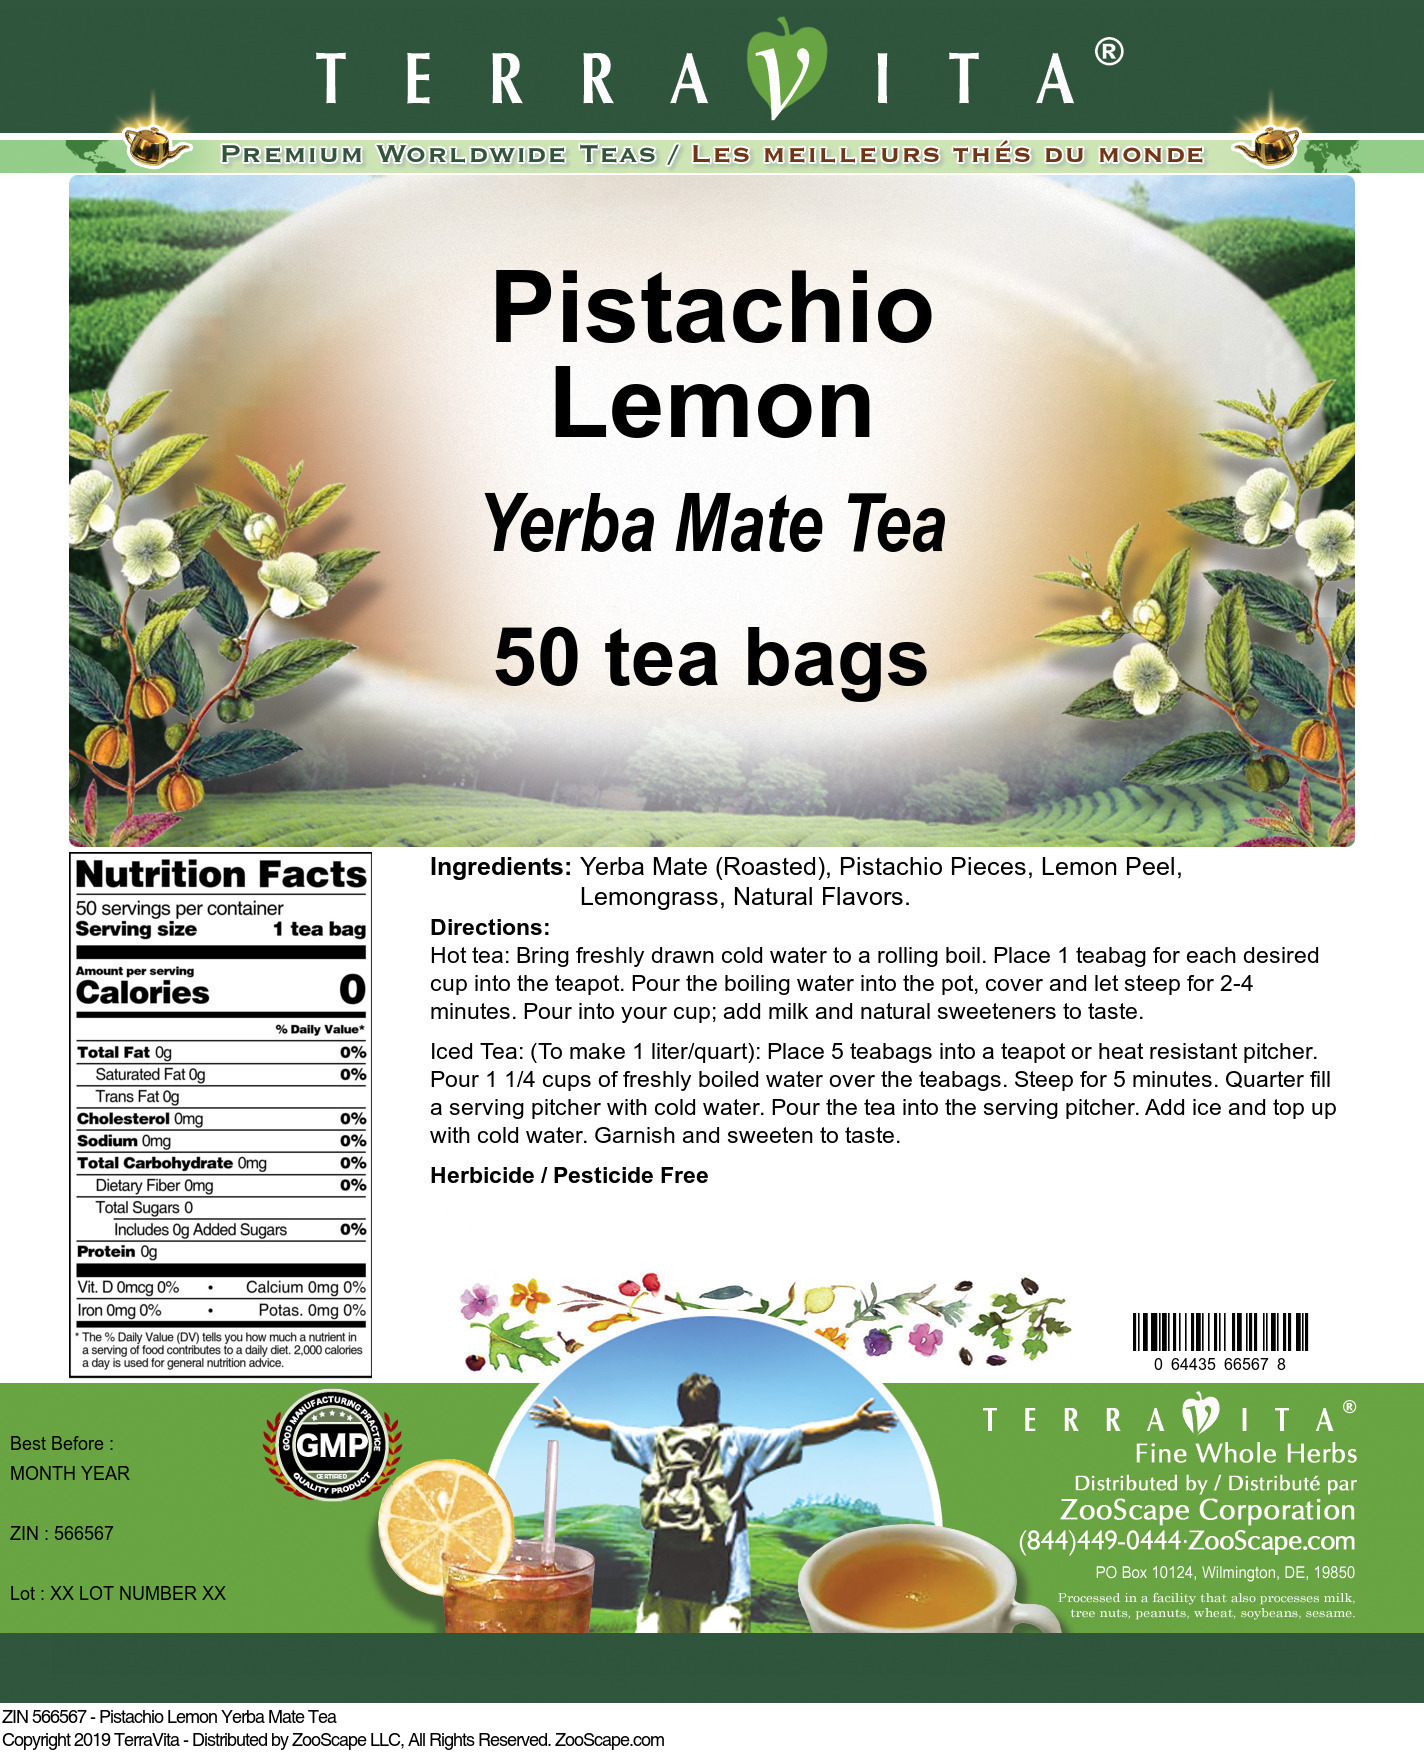 Pistachio Lemon Yerba Mate Tea - Label